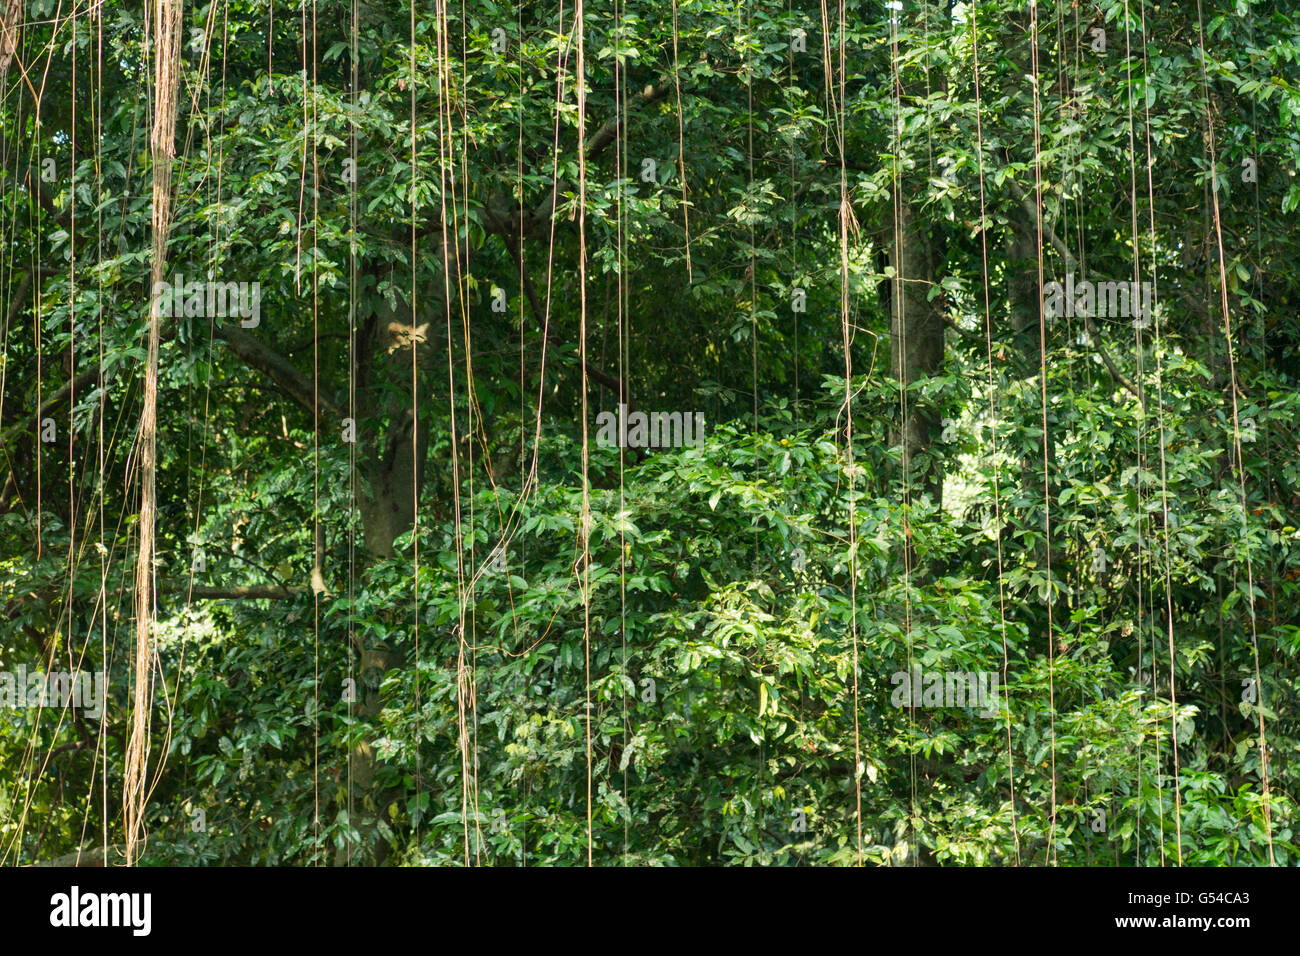 Indonesien, Java Barat, Kota Bogor, Lianen im Botanischen Garten, Kebun Raya Bogor, Botanischer Garten Stockfoto